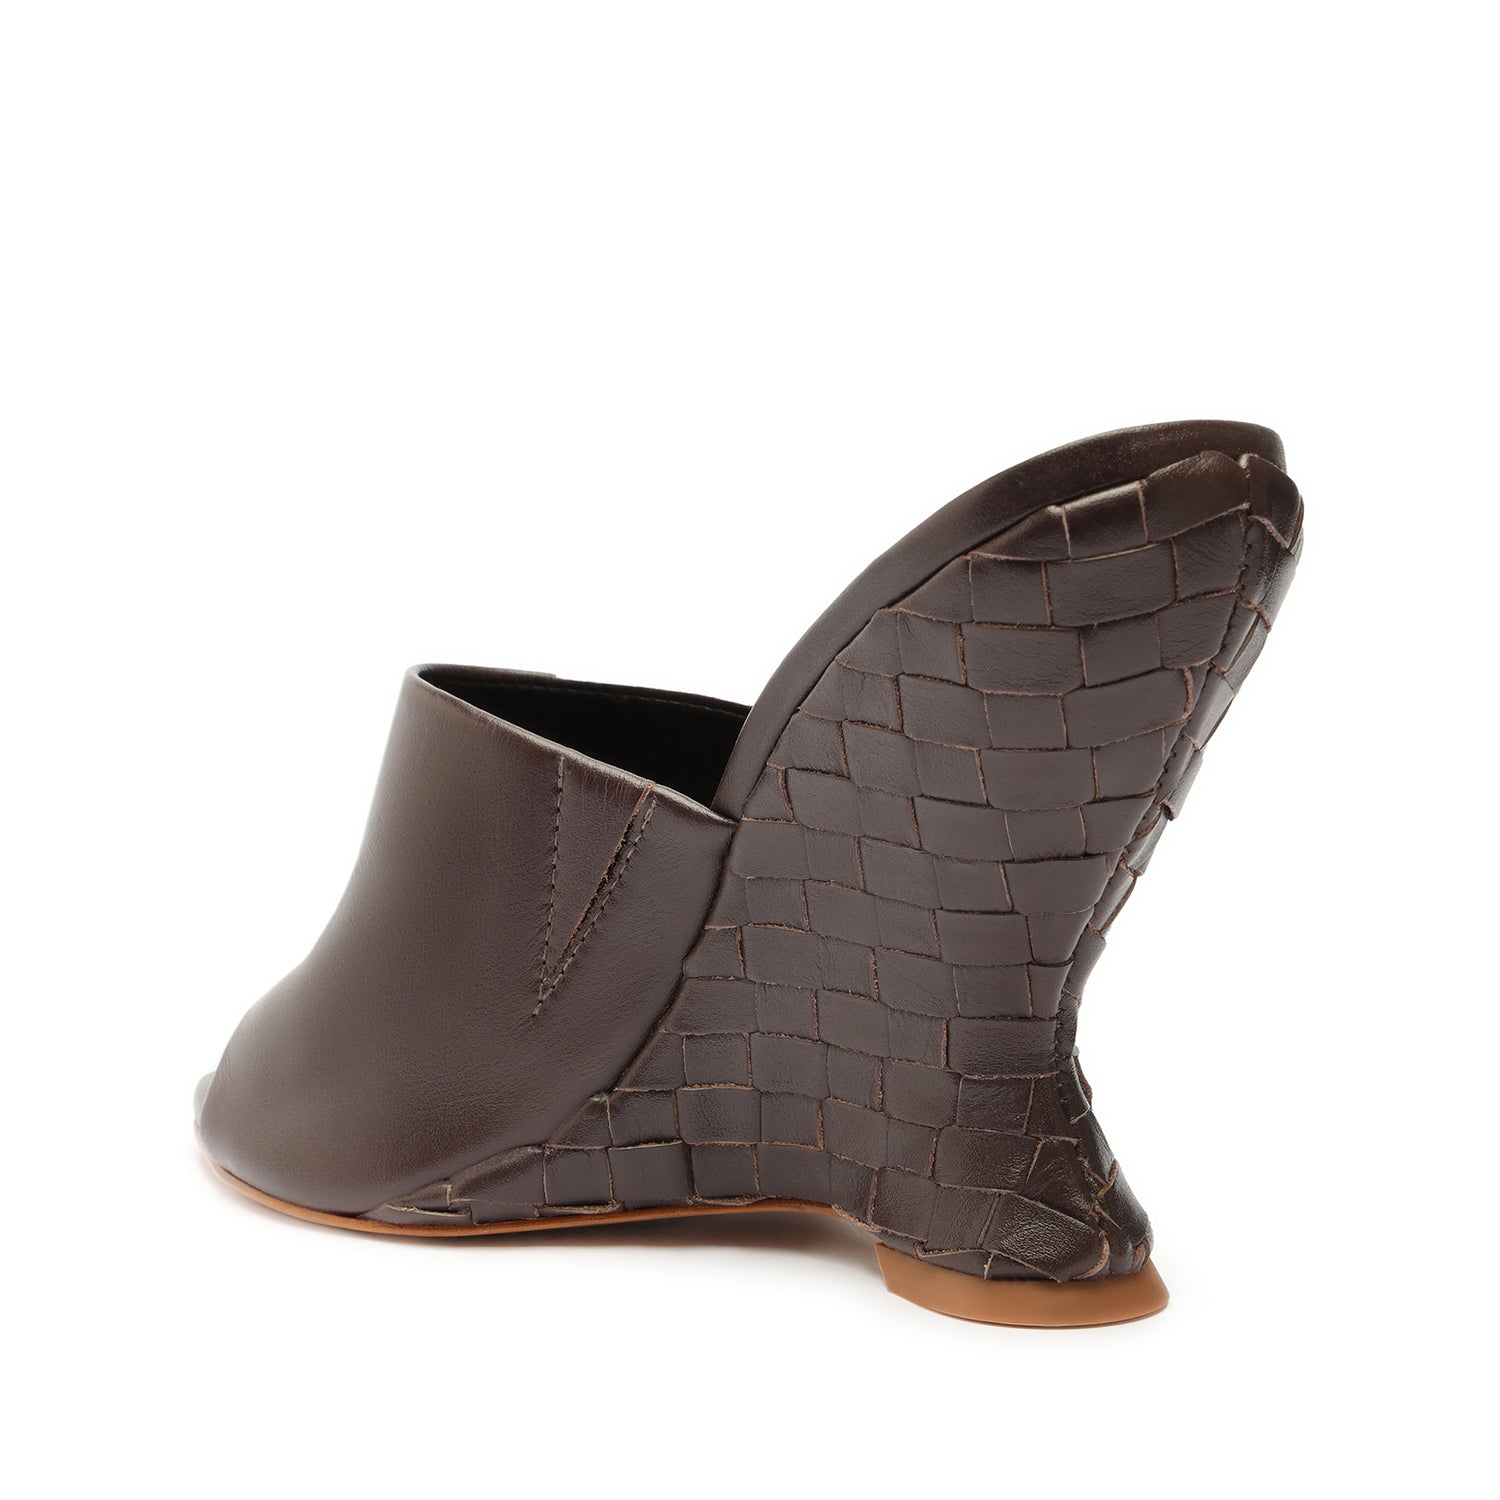 Aprill Woven Leather Sandal Sandals Resort 24    - Schutz Shoes